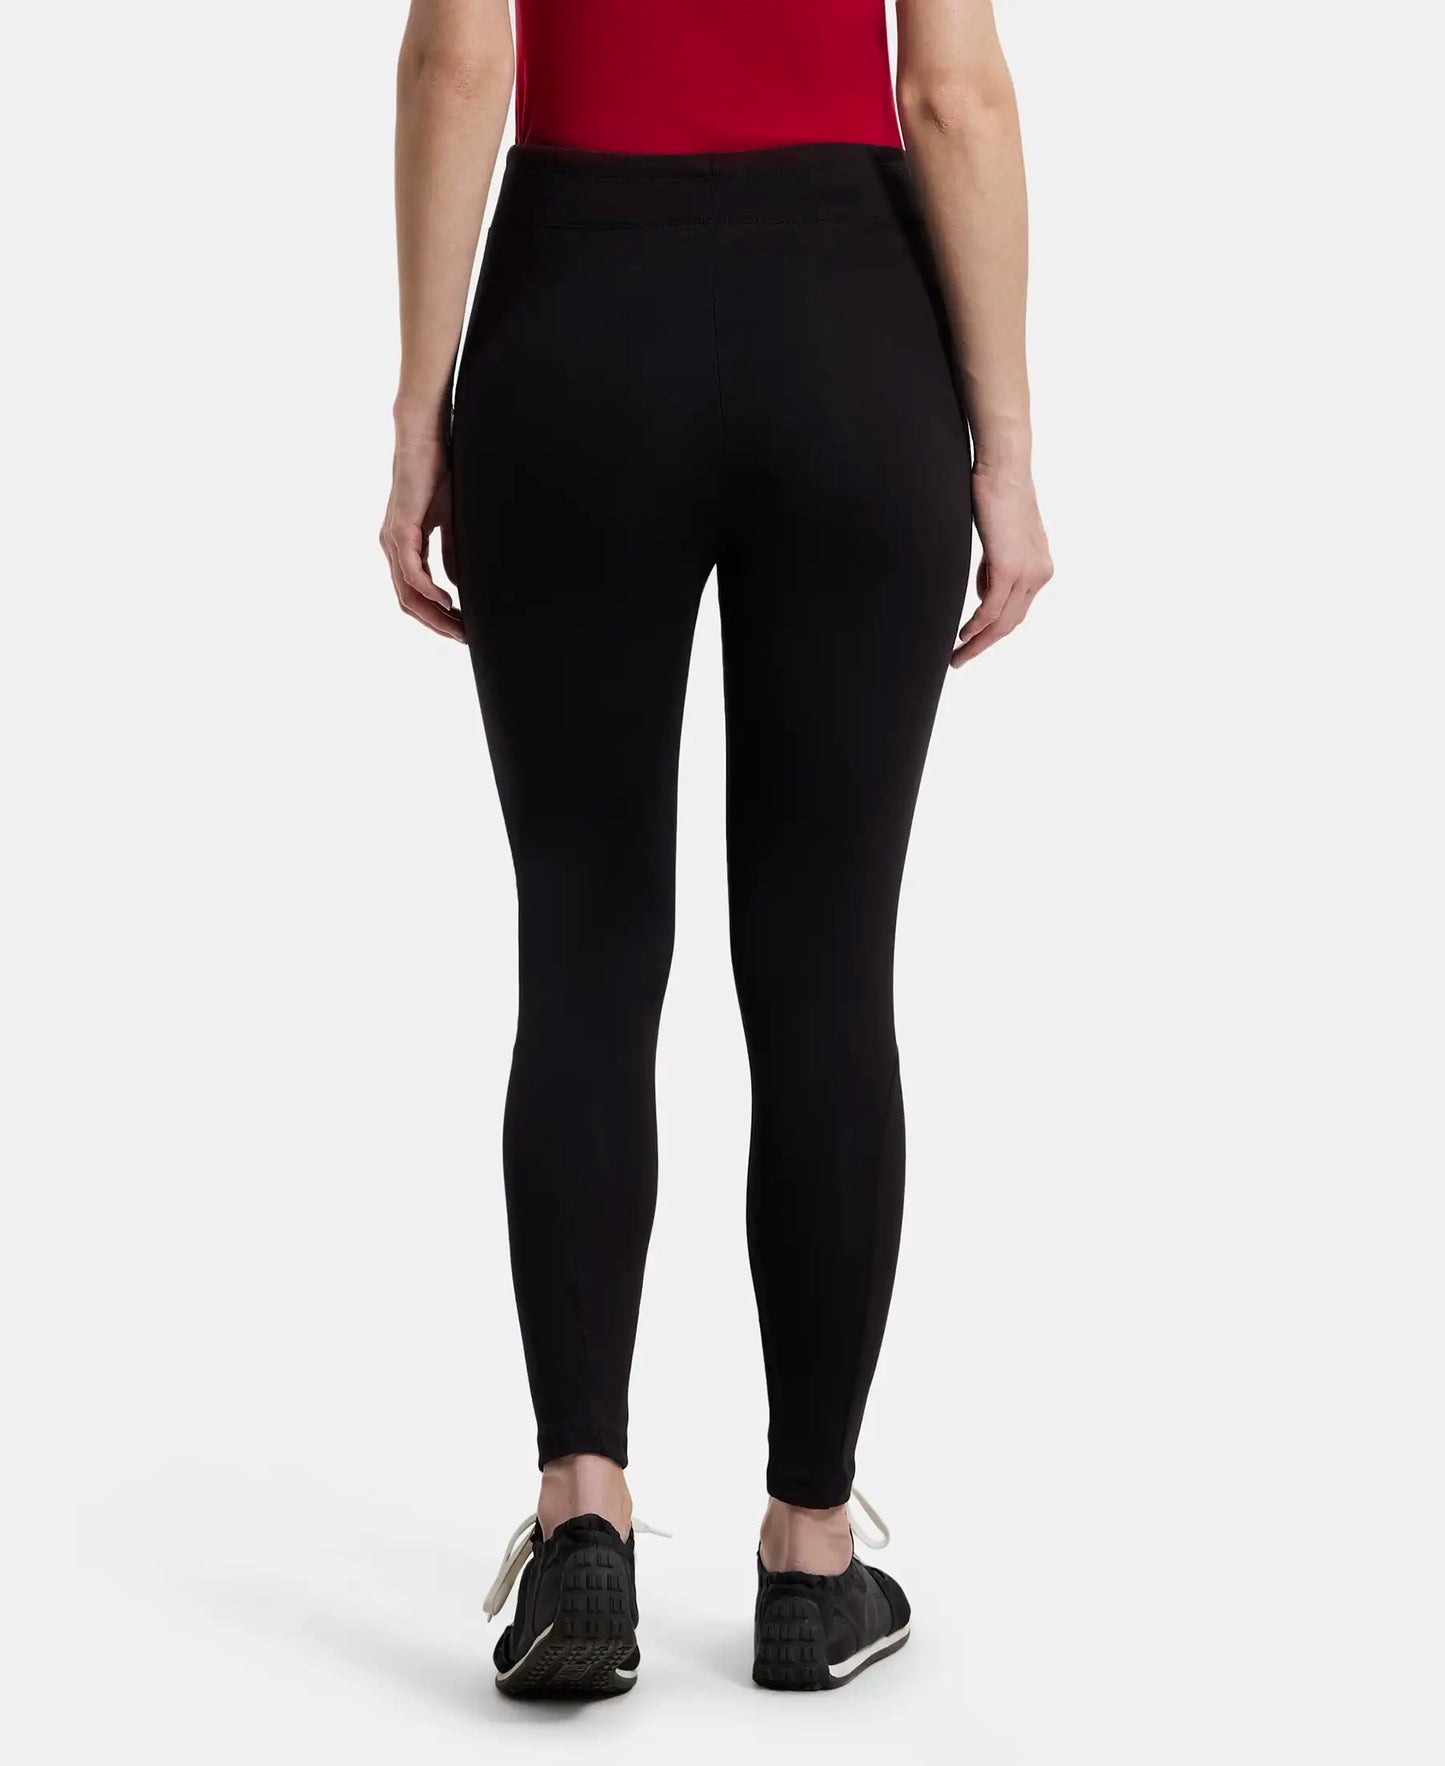 Super Combed Cotton Elastane Yoga Pants with Side Zipper Pocket - Black-3